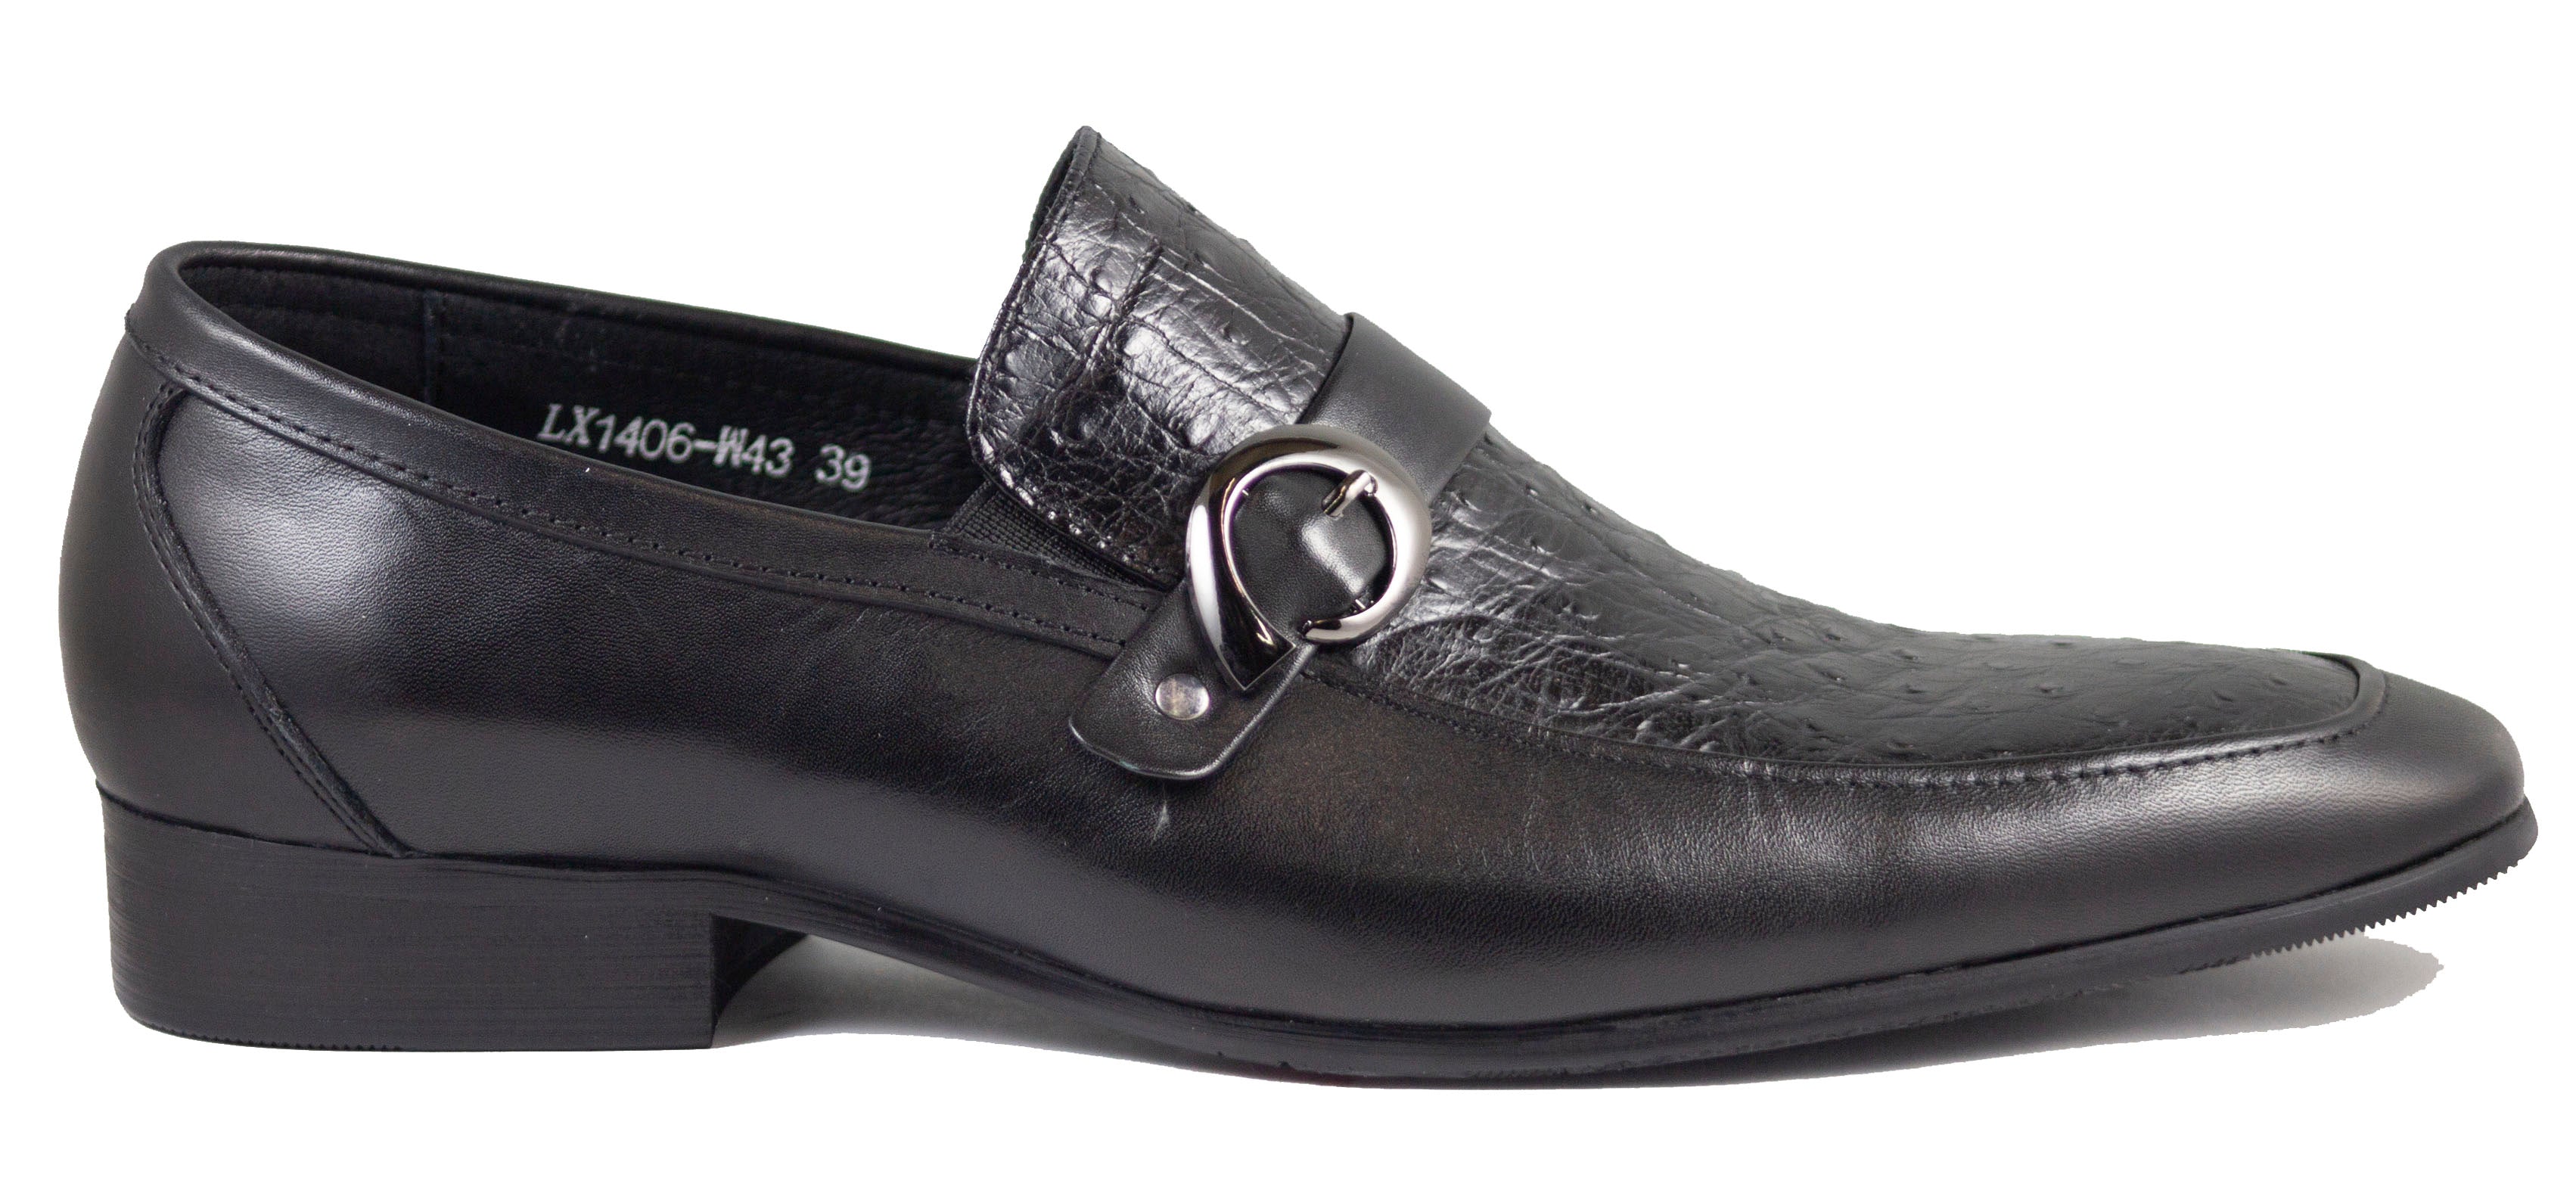 Mario Samello  Men's Dress Shoes  LX1406-W43